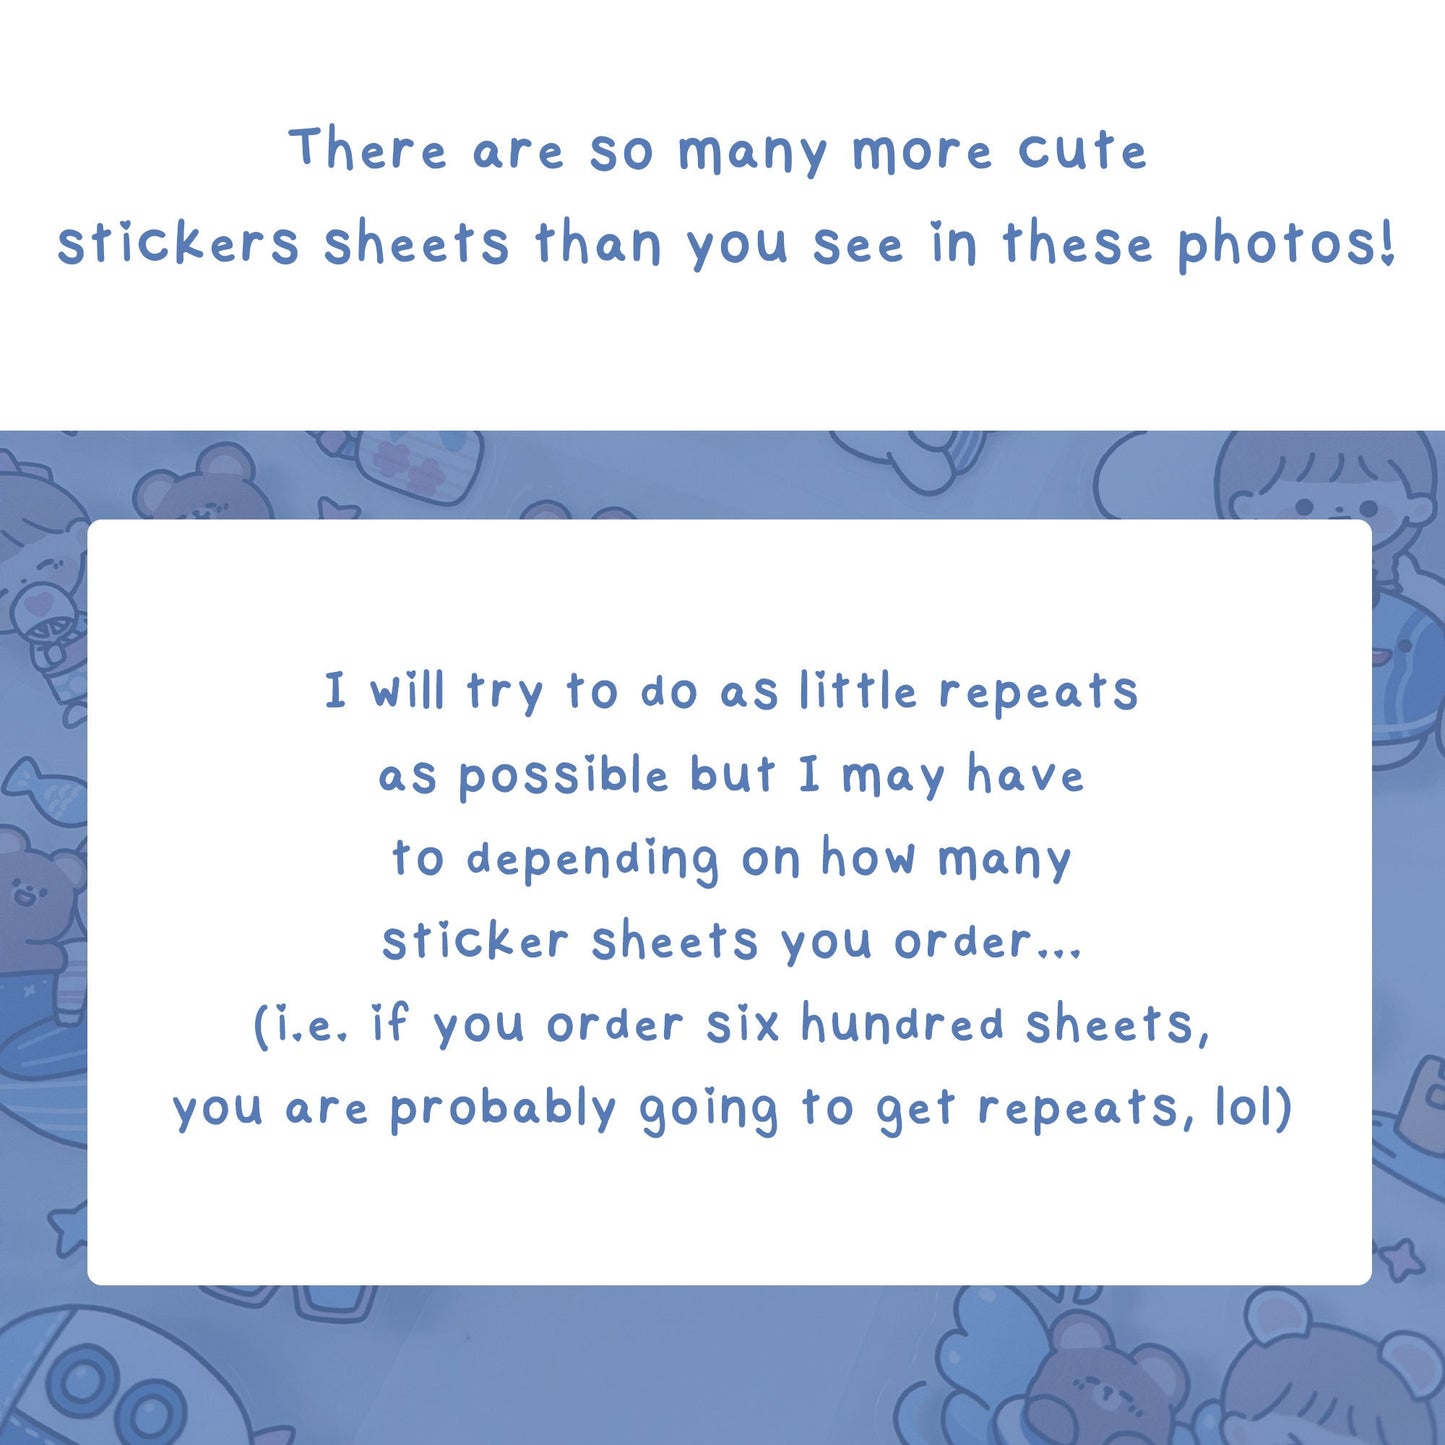 Random Kawaii Sticker Sheet Grab Bag, Mystery Sticker Sheets, Sticker Packs, Journal Stickers, Clear & Washi Stickers, Kawaii Sticker Sheets